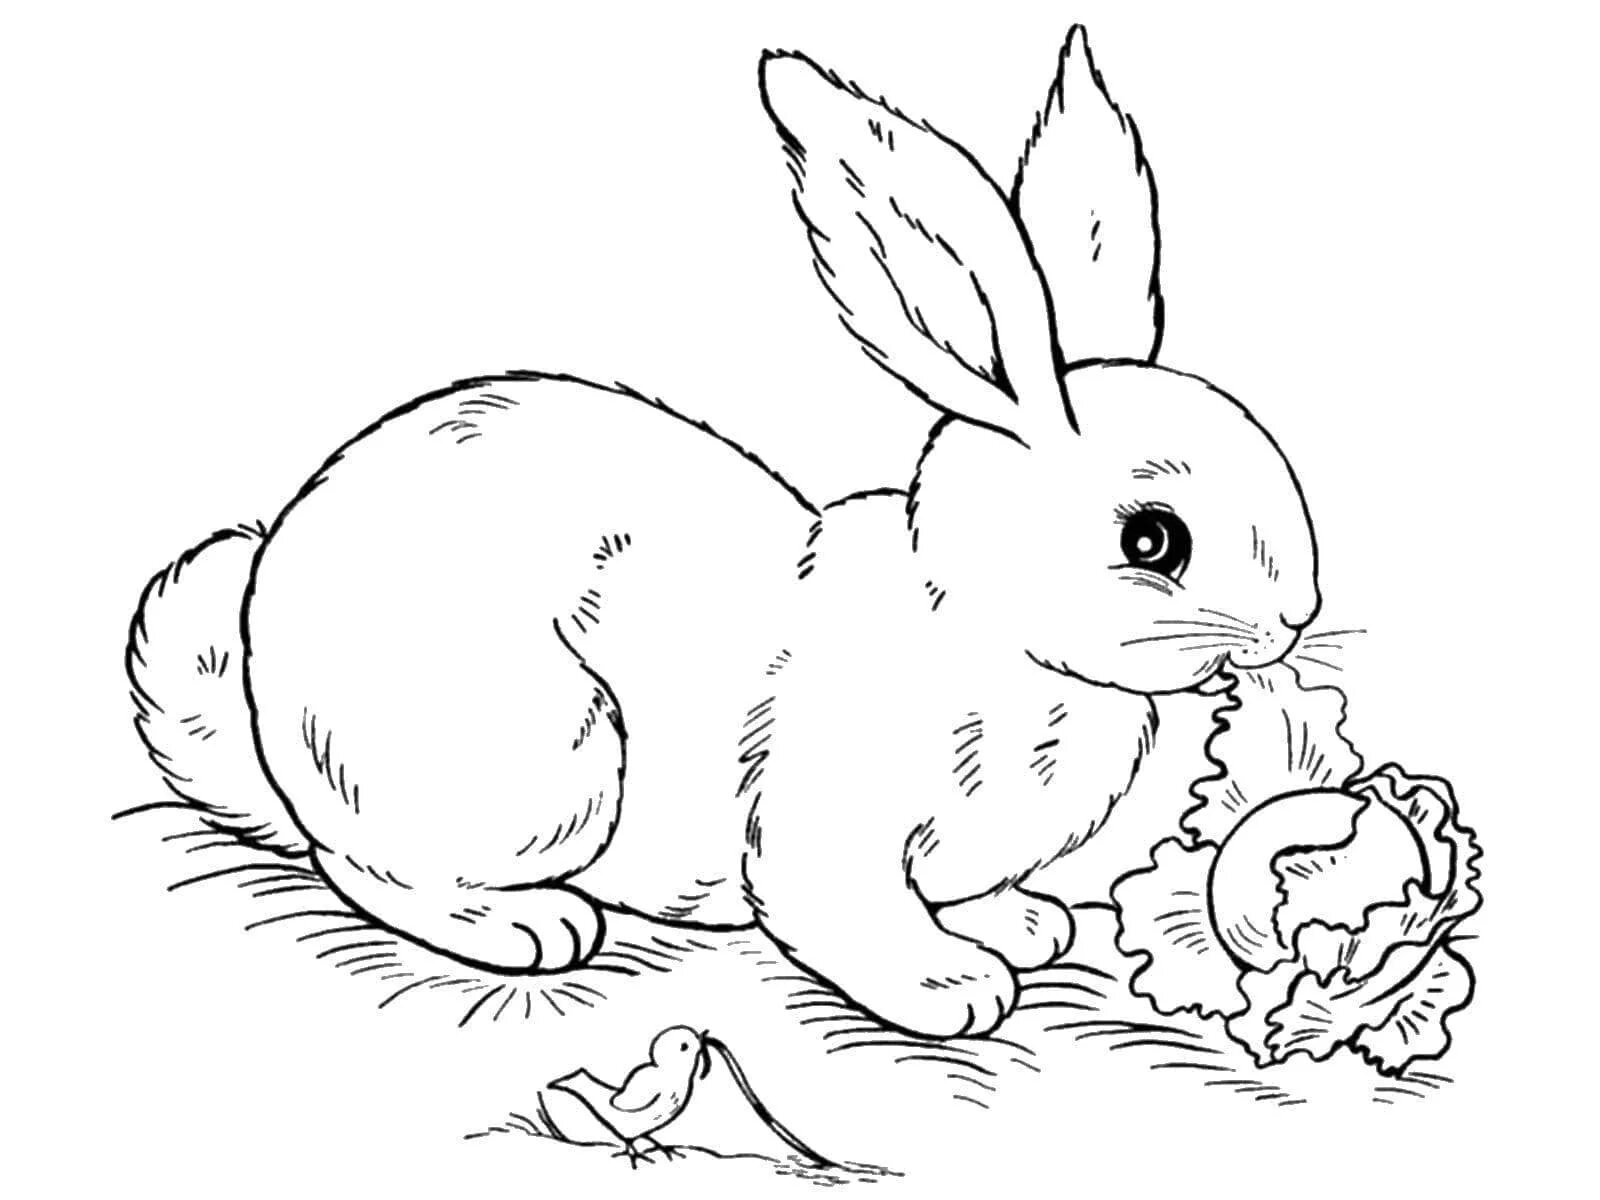 Baby bunny #1